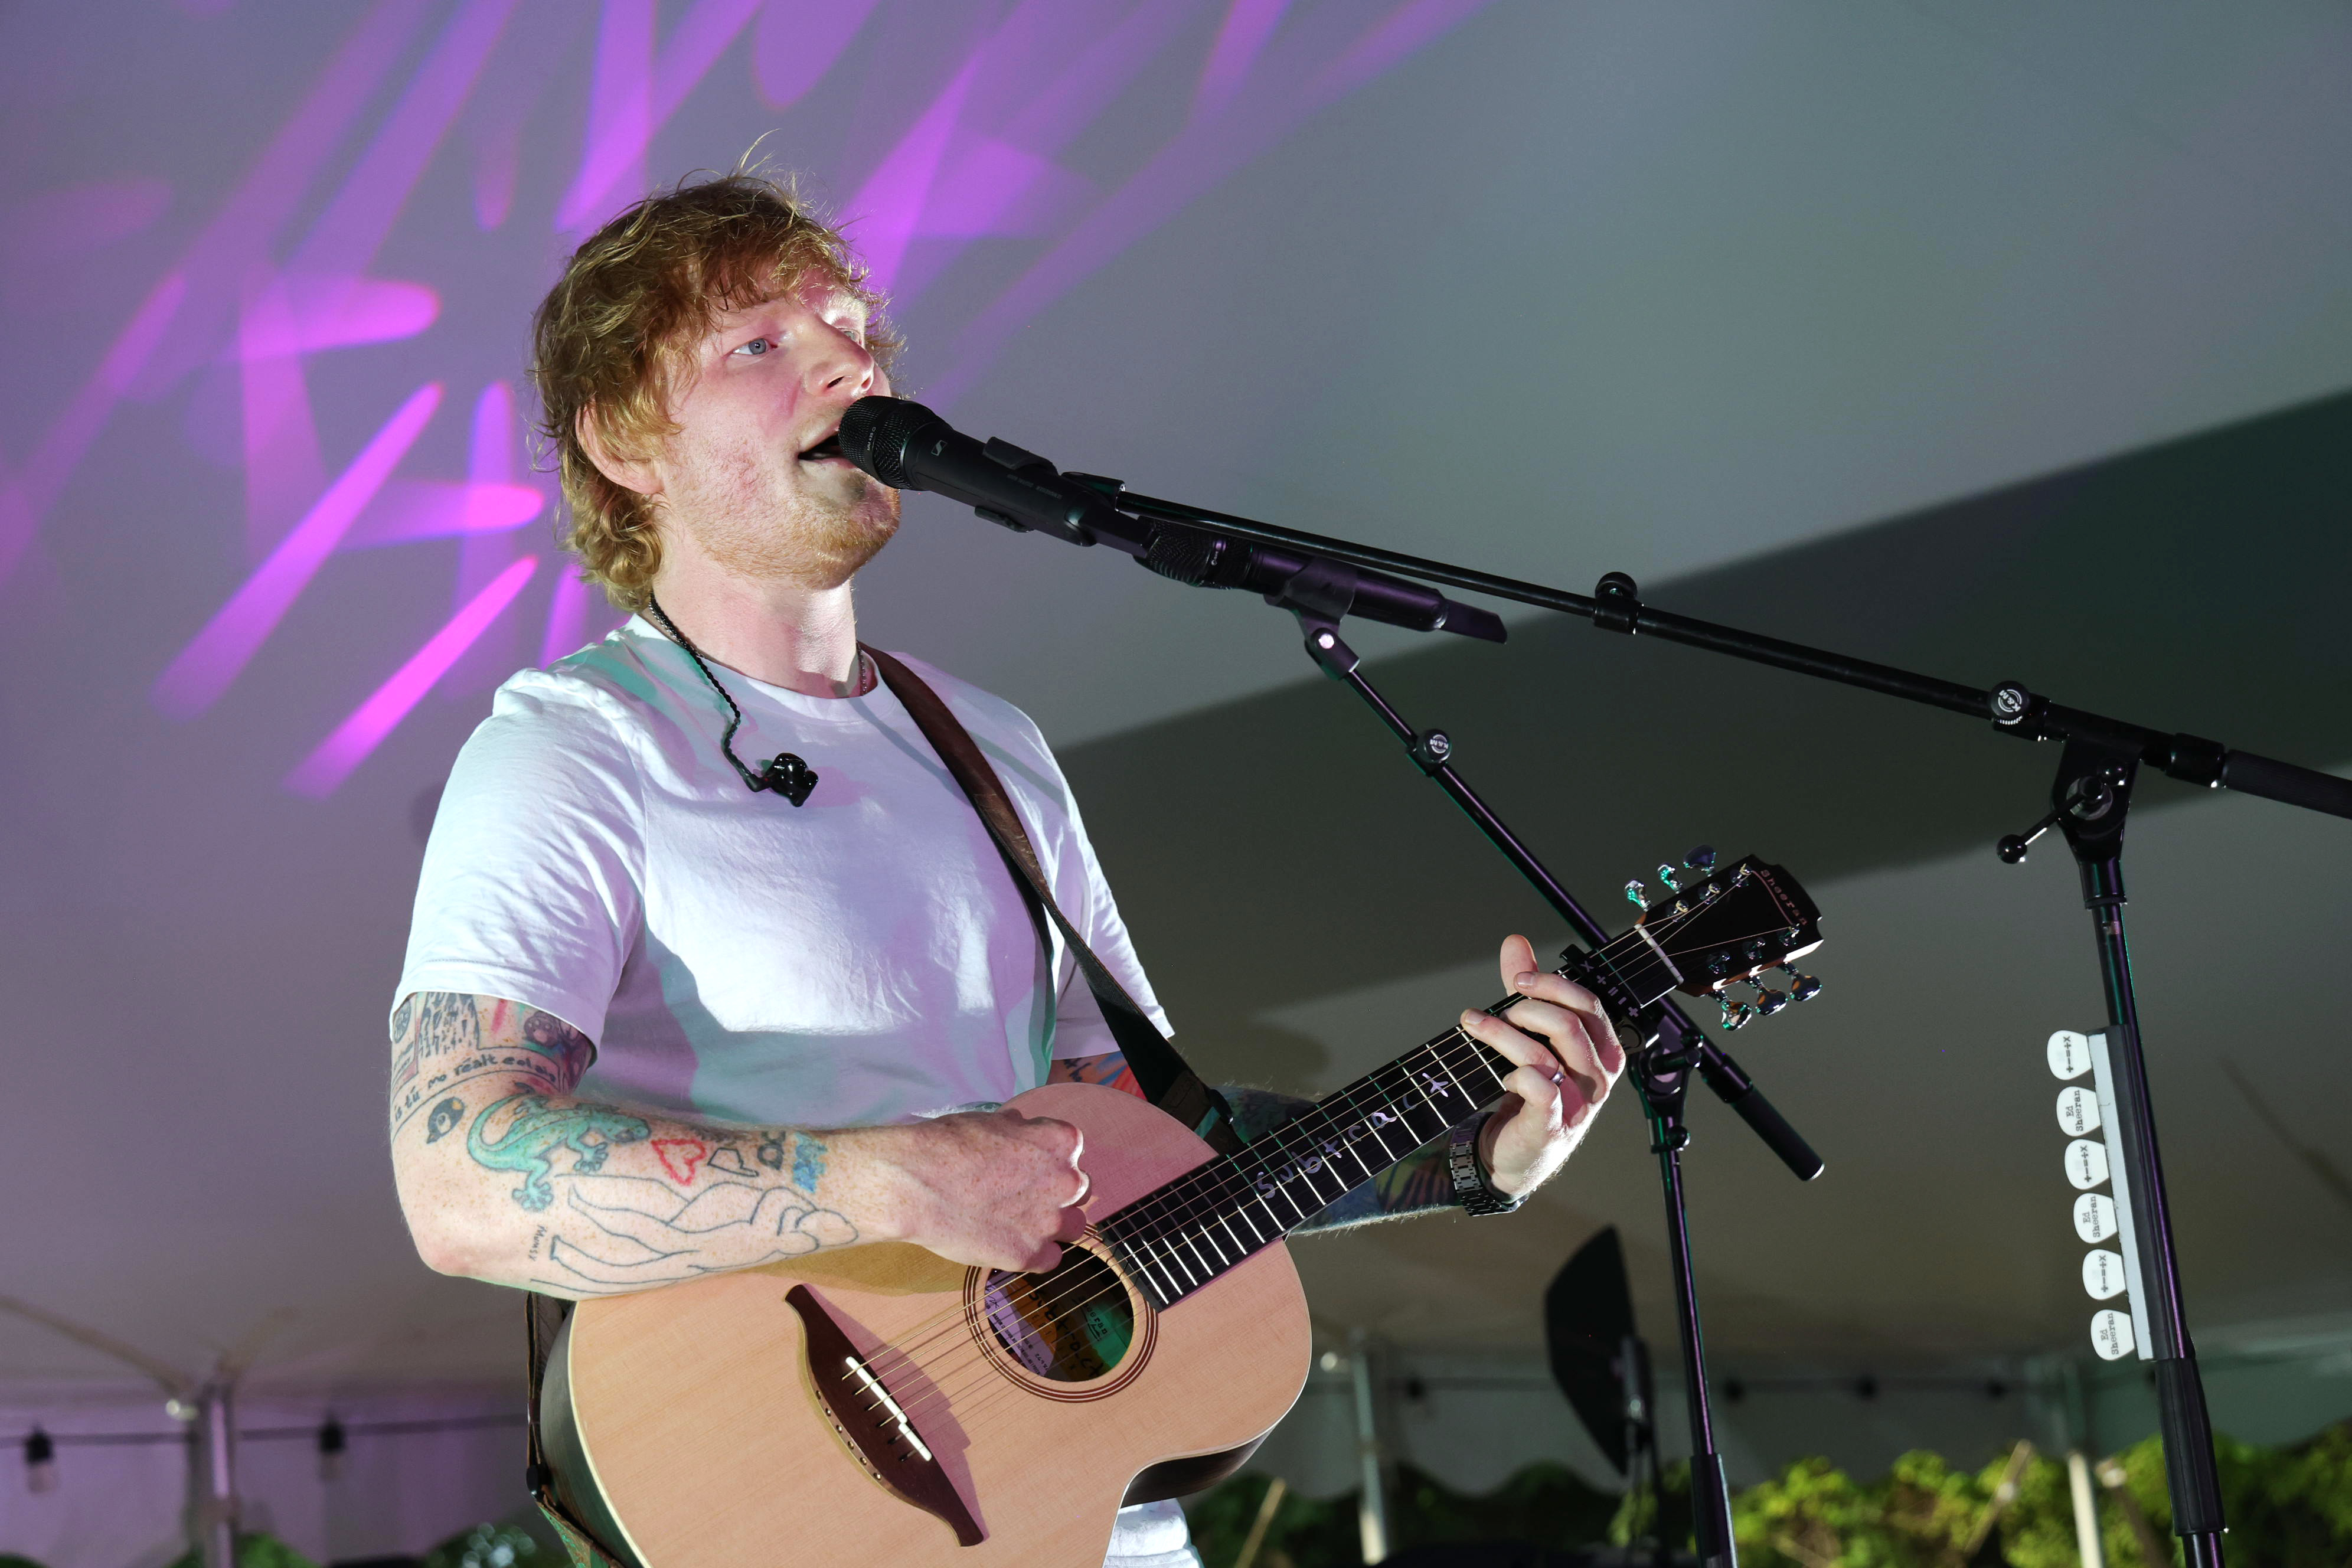 Ed Sheeran onstage playing the guitar